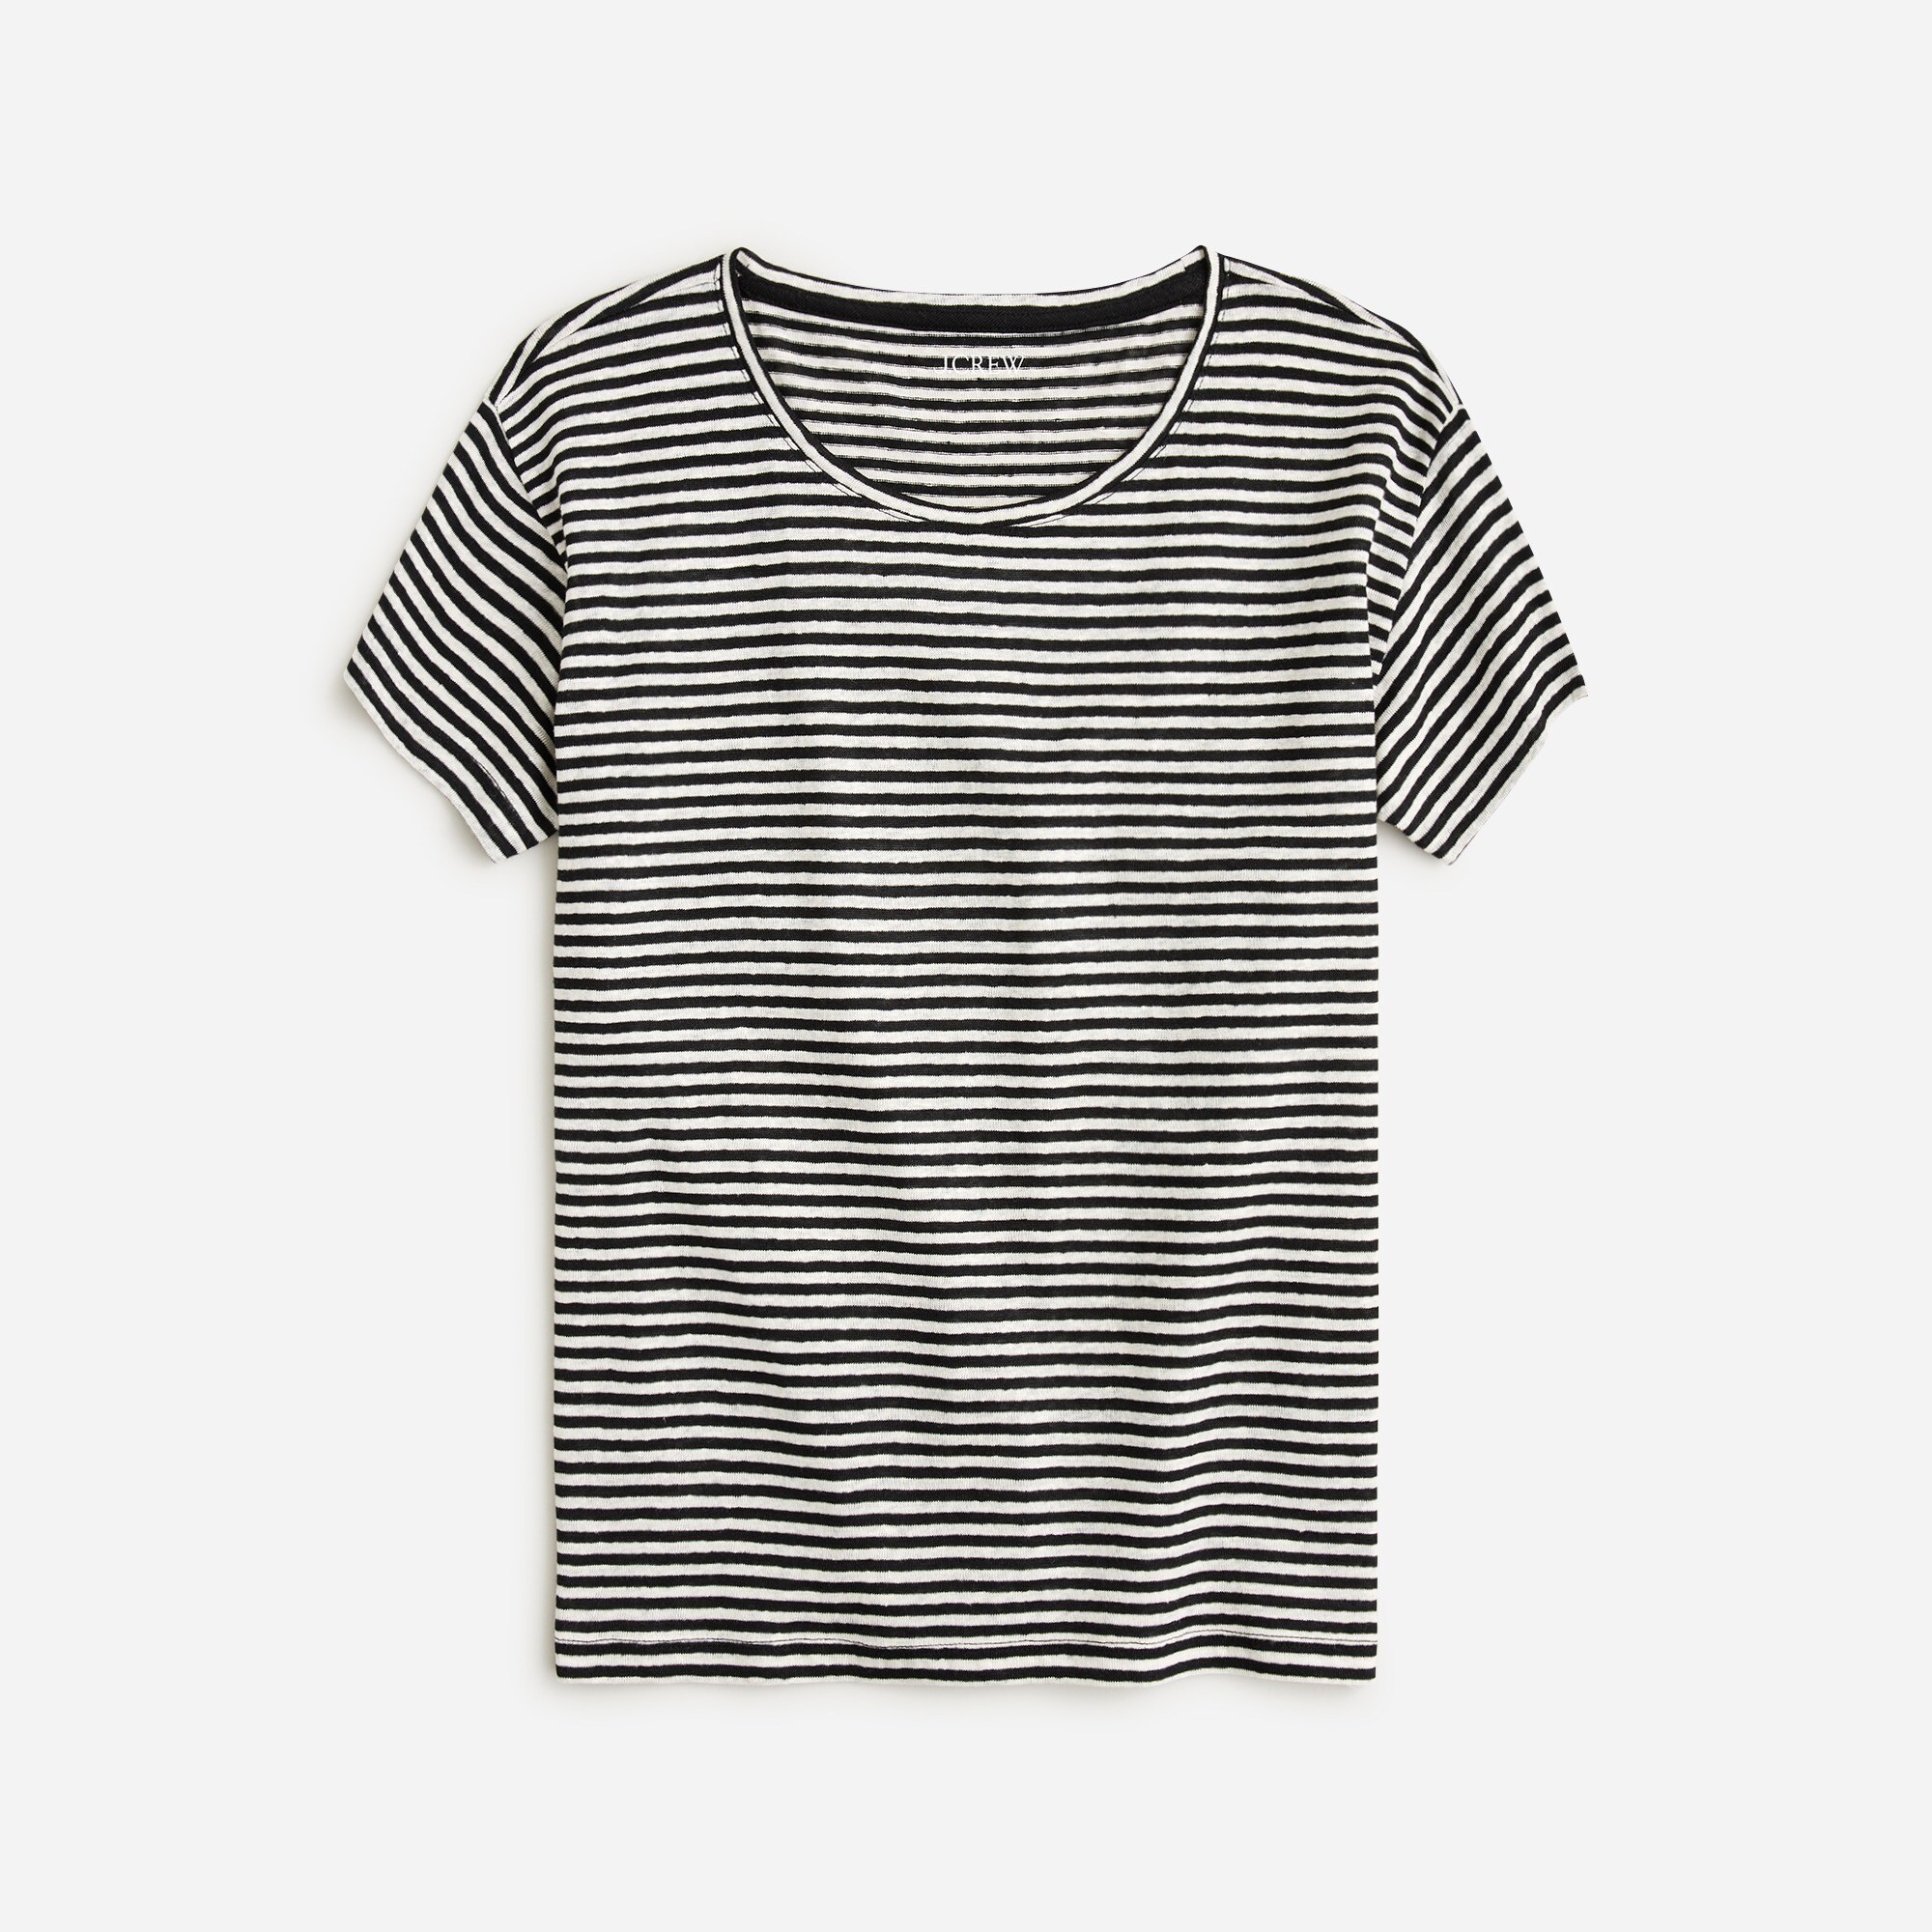  Relaxed linen T-shirt in stripe